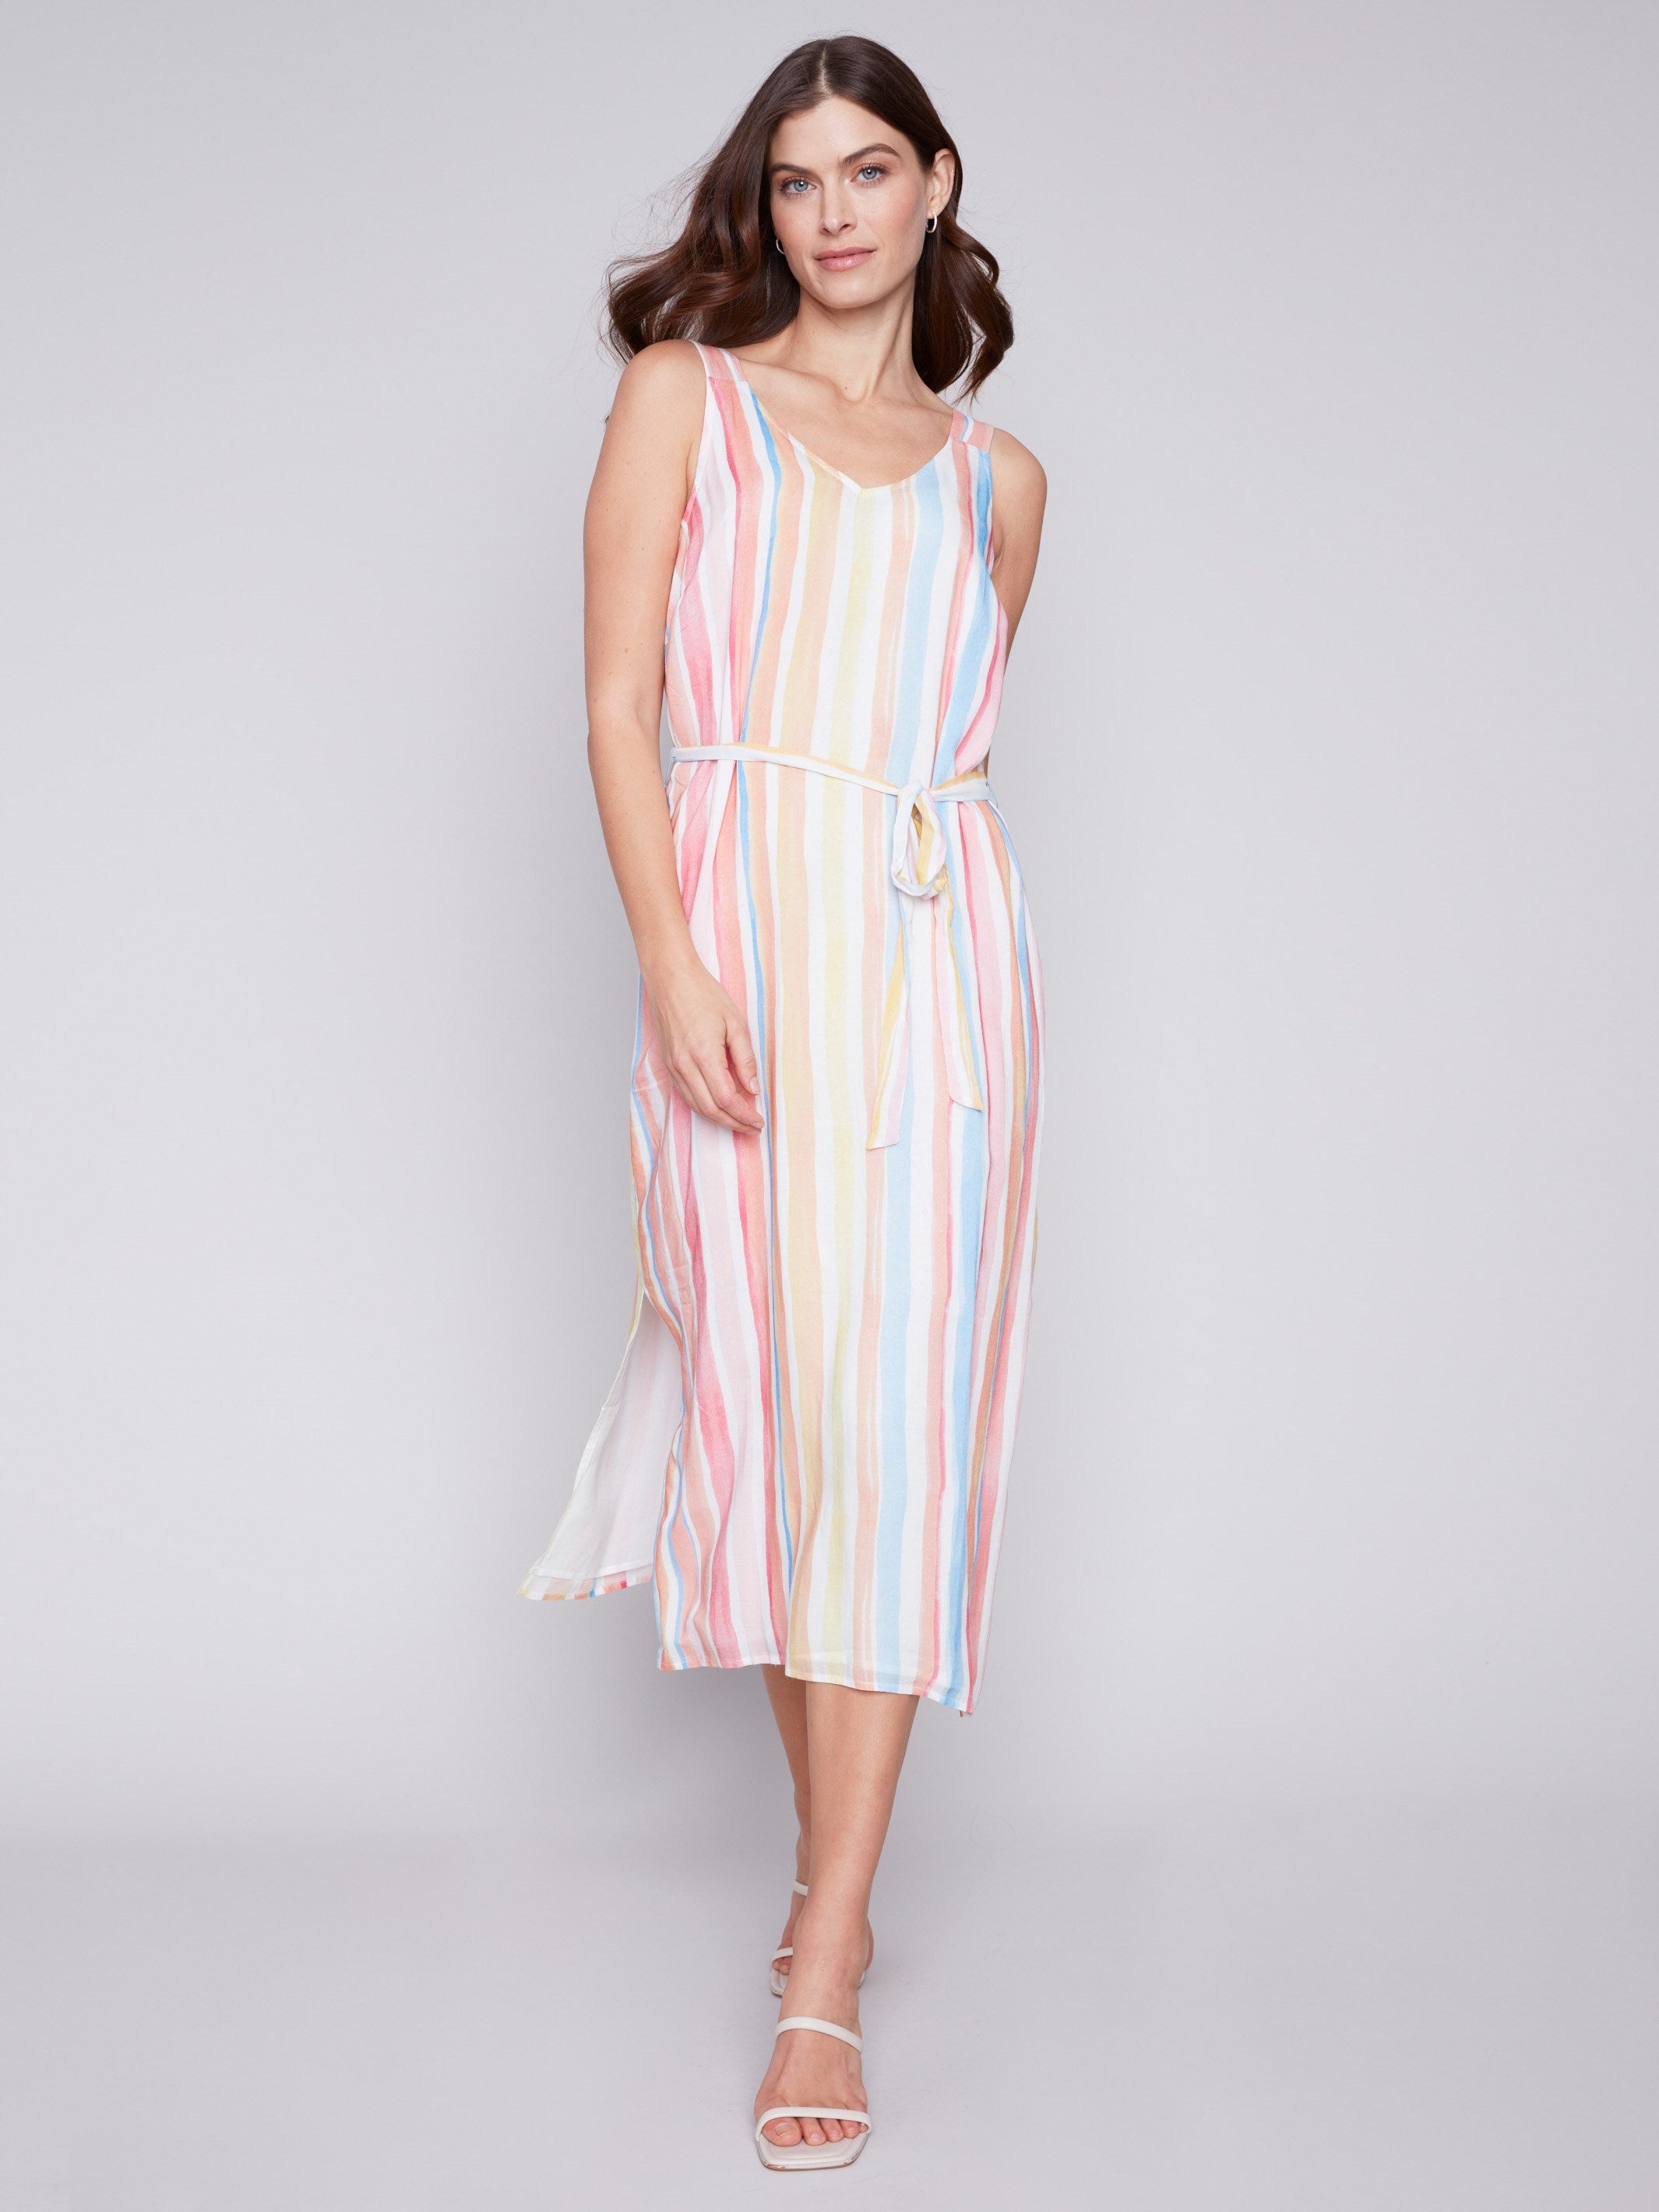 Printed Chiffon Dress - Stripes - Charlie B Collection Canada - Image 4